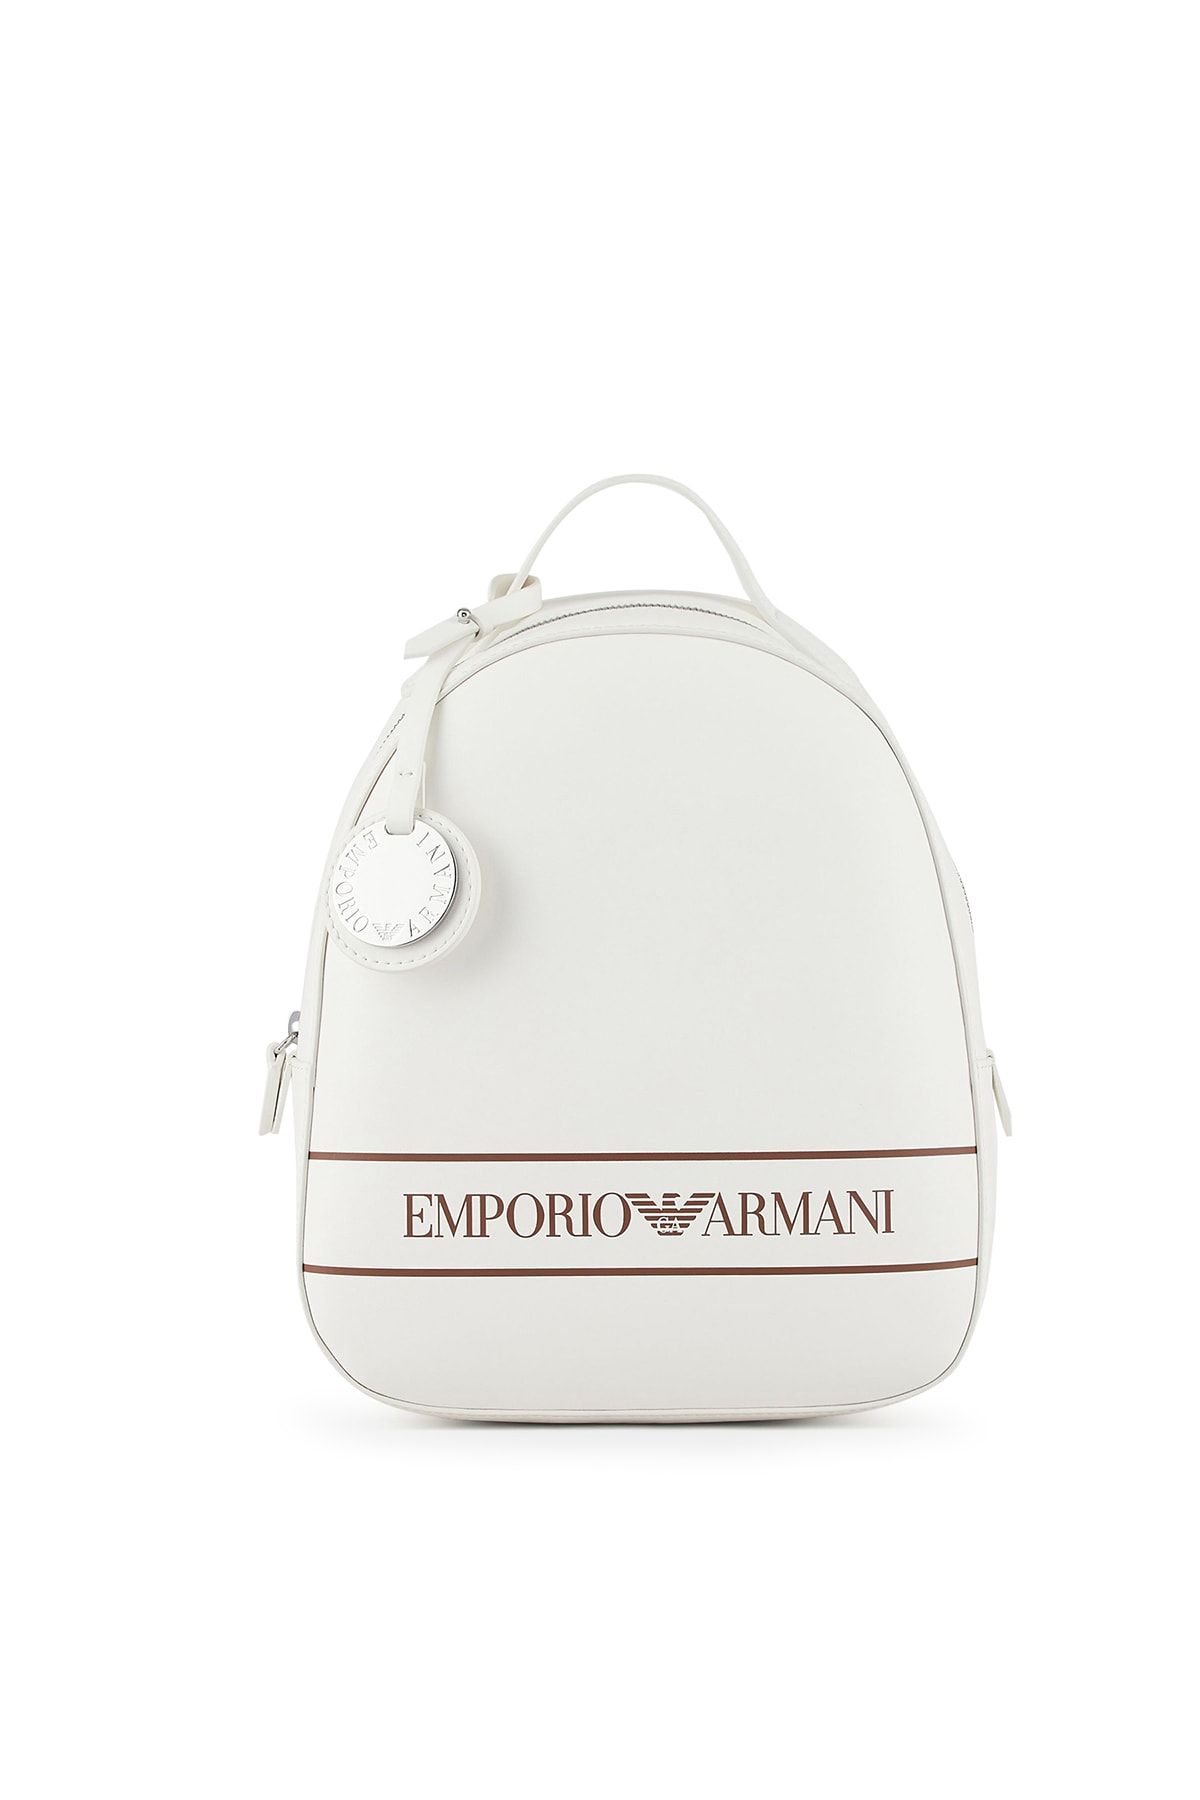 Emporio Armani Kadın Beyaz Çanta Y3l024 Yfo4e 84319